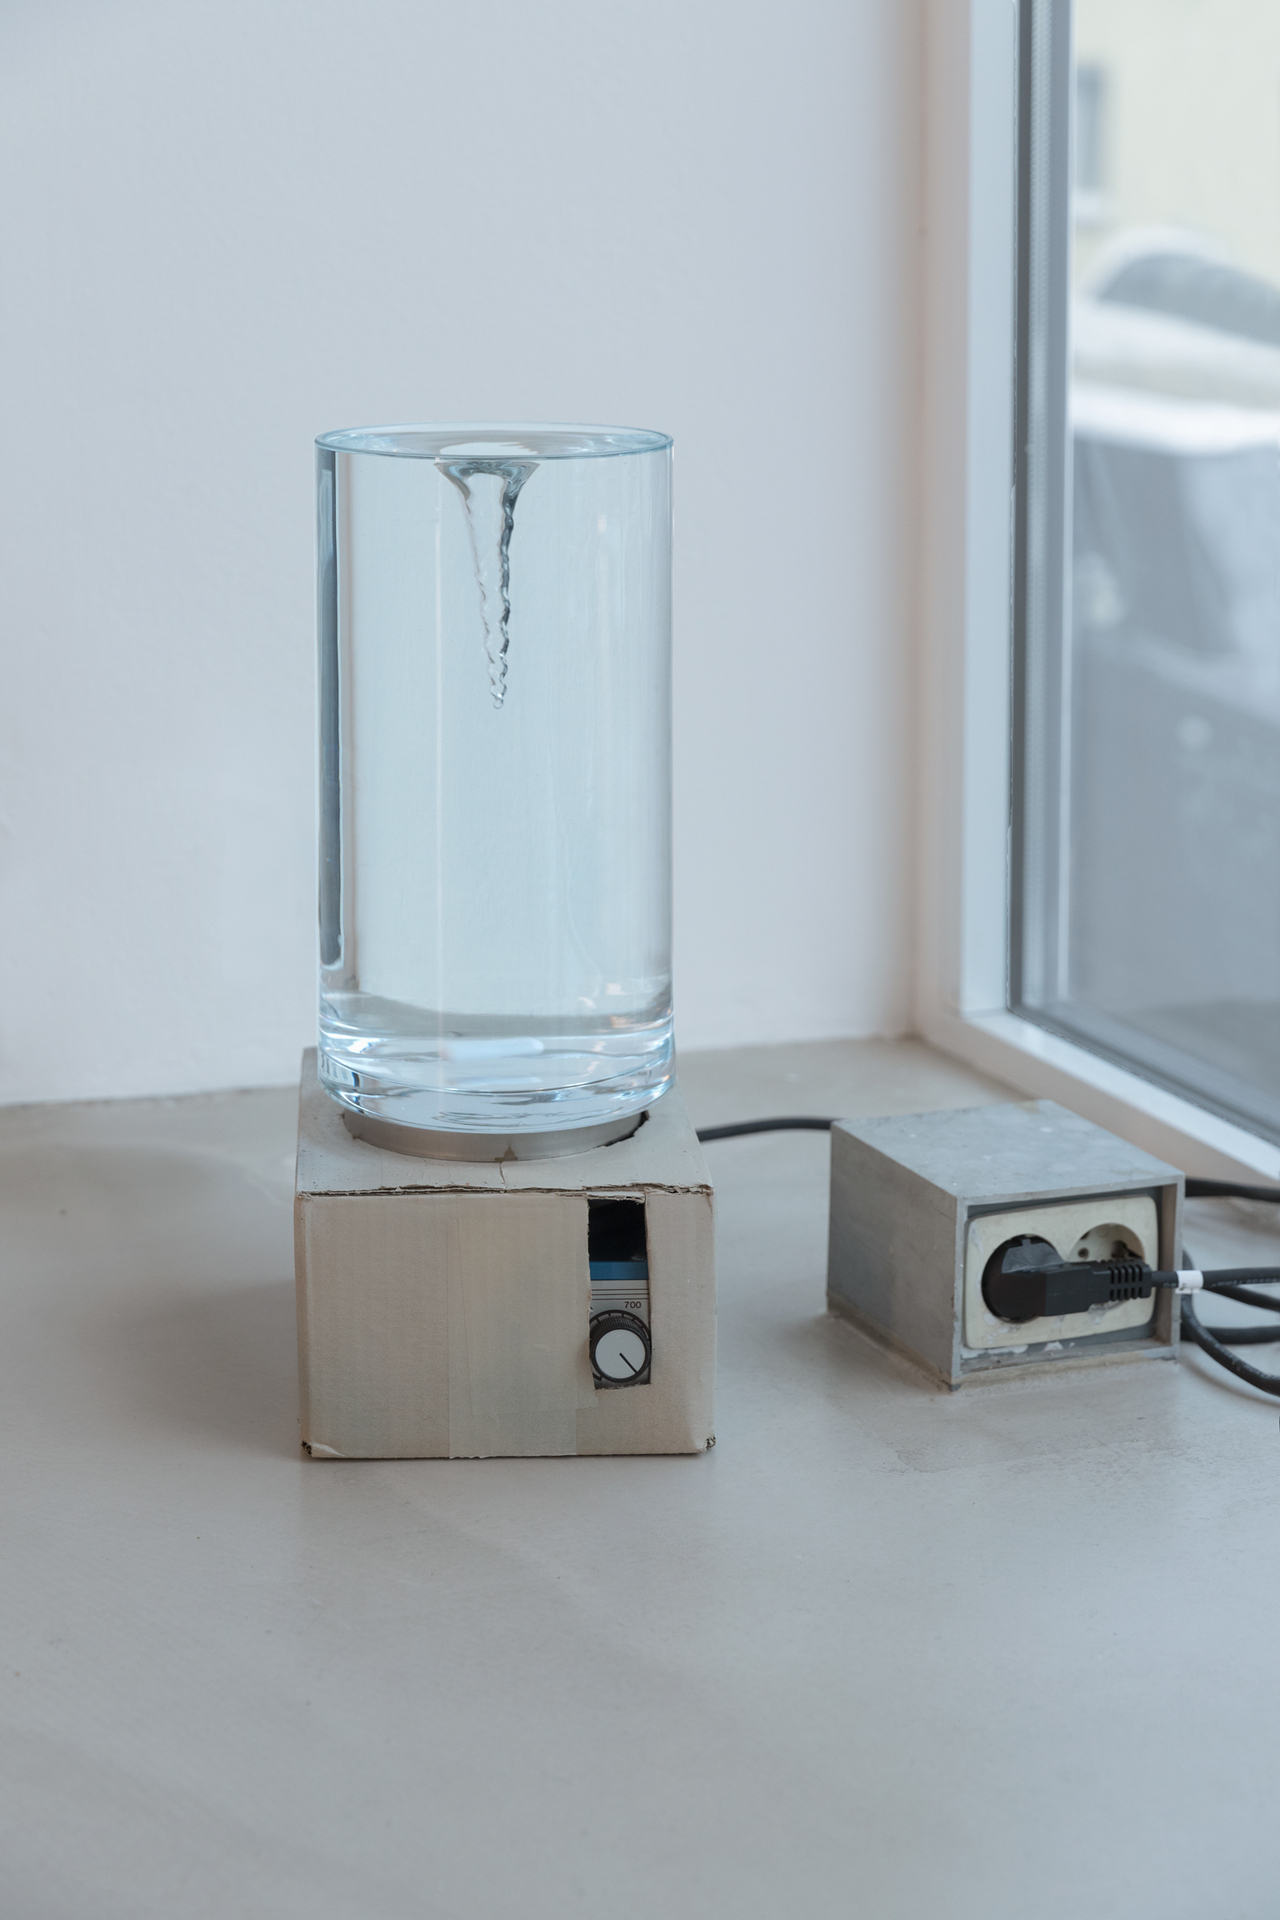 Susi Gelb - Artificial Eddy 2, 2020, magnetic stirrer, vase, water, cardboard box, spray paint, pigments, 45x40x34 cm